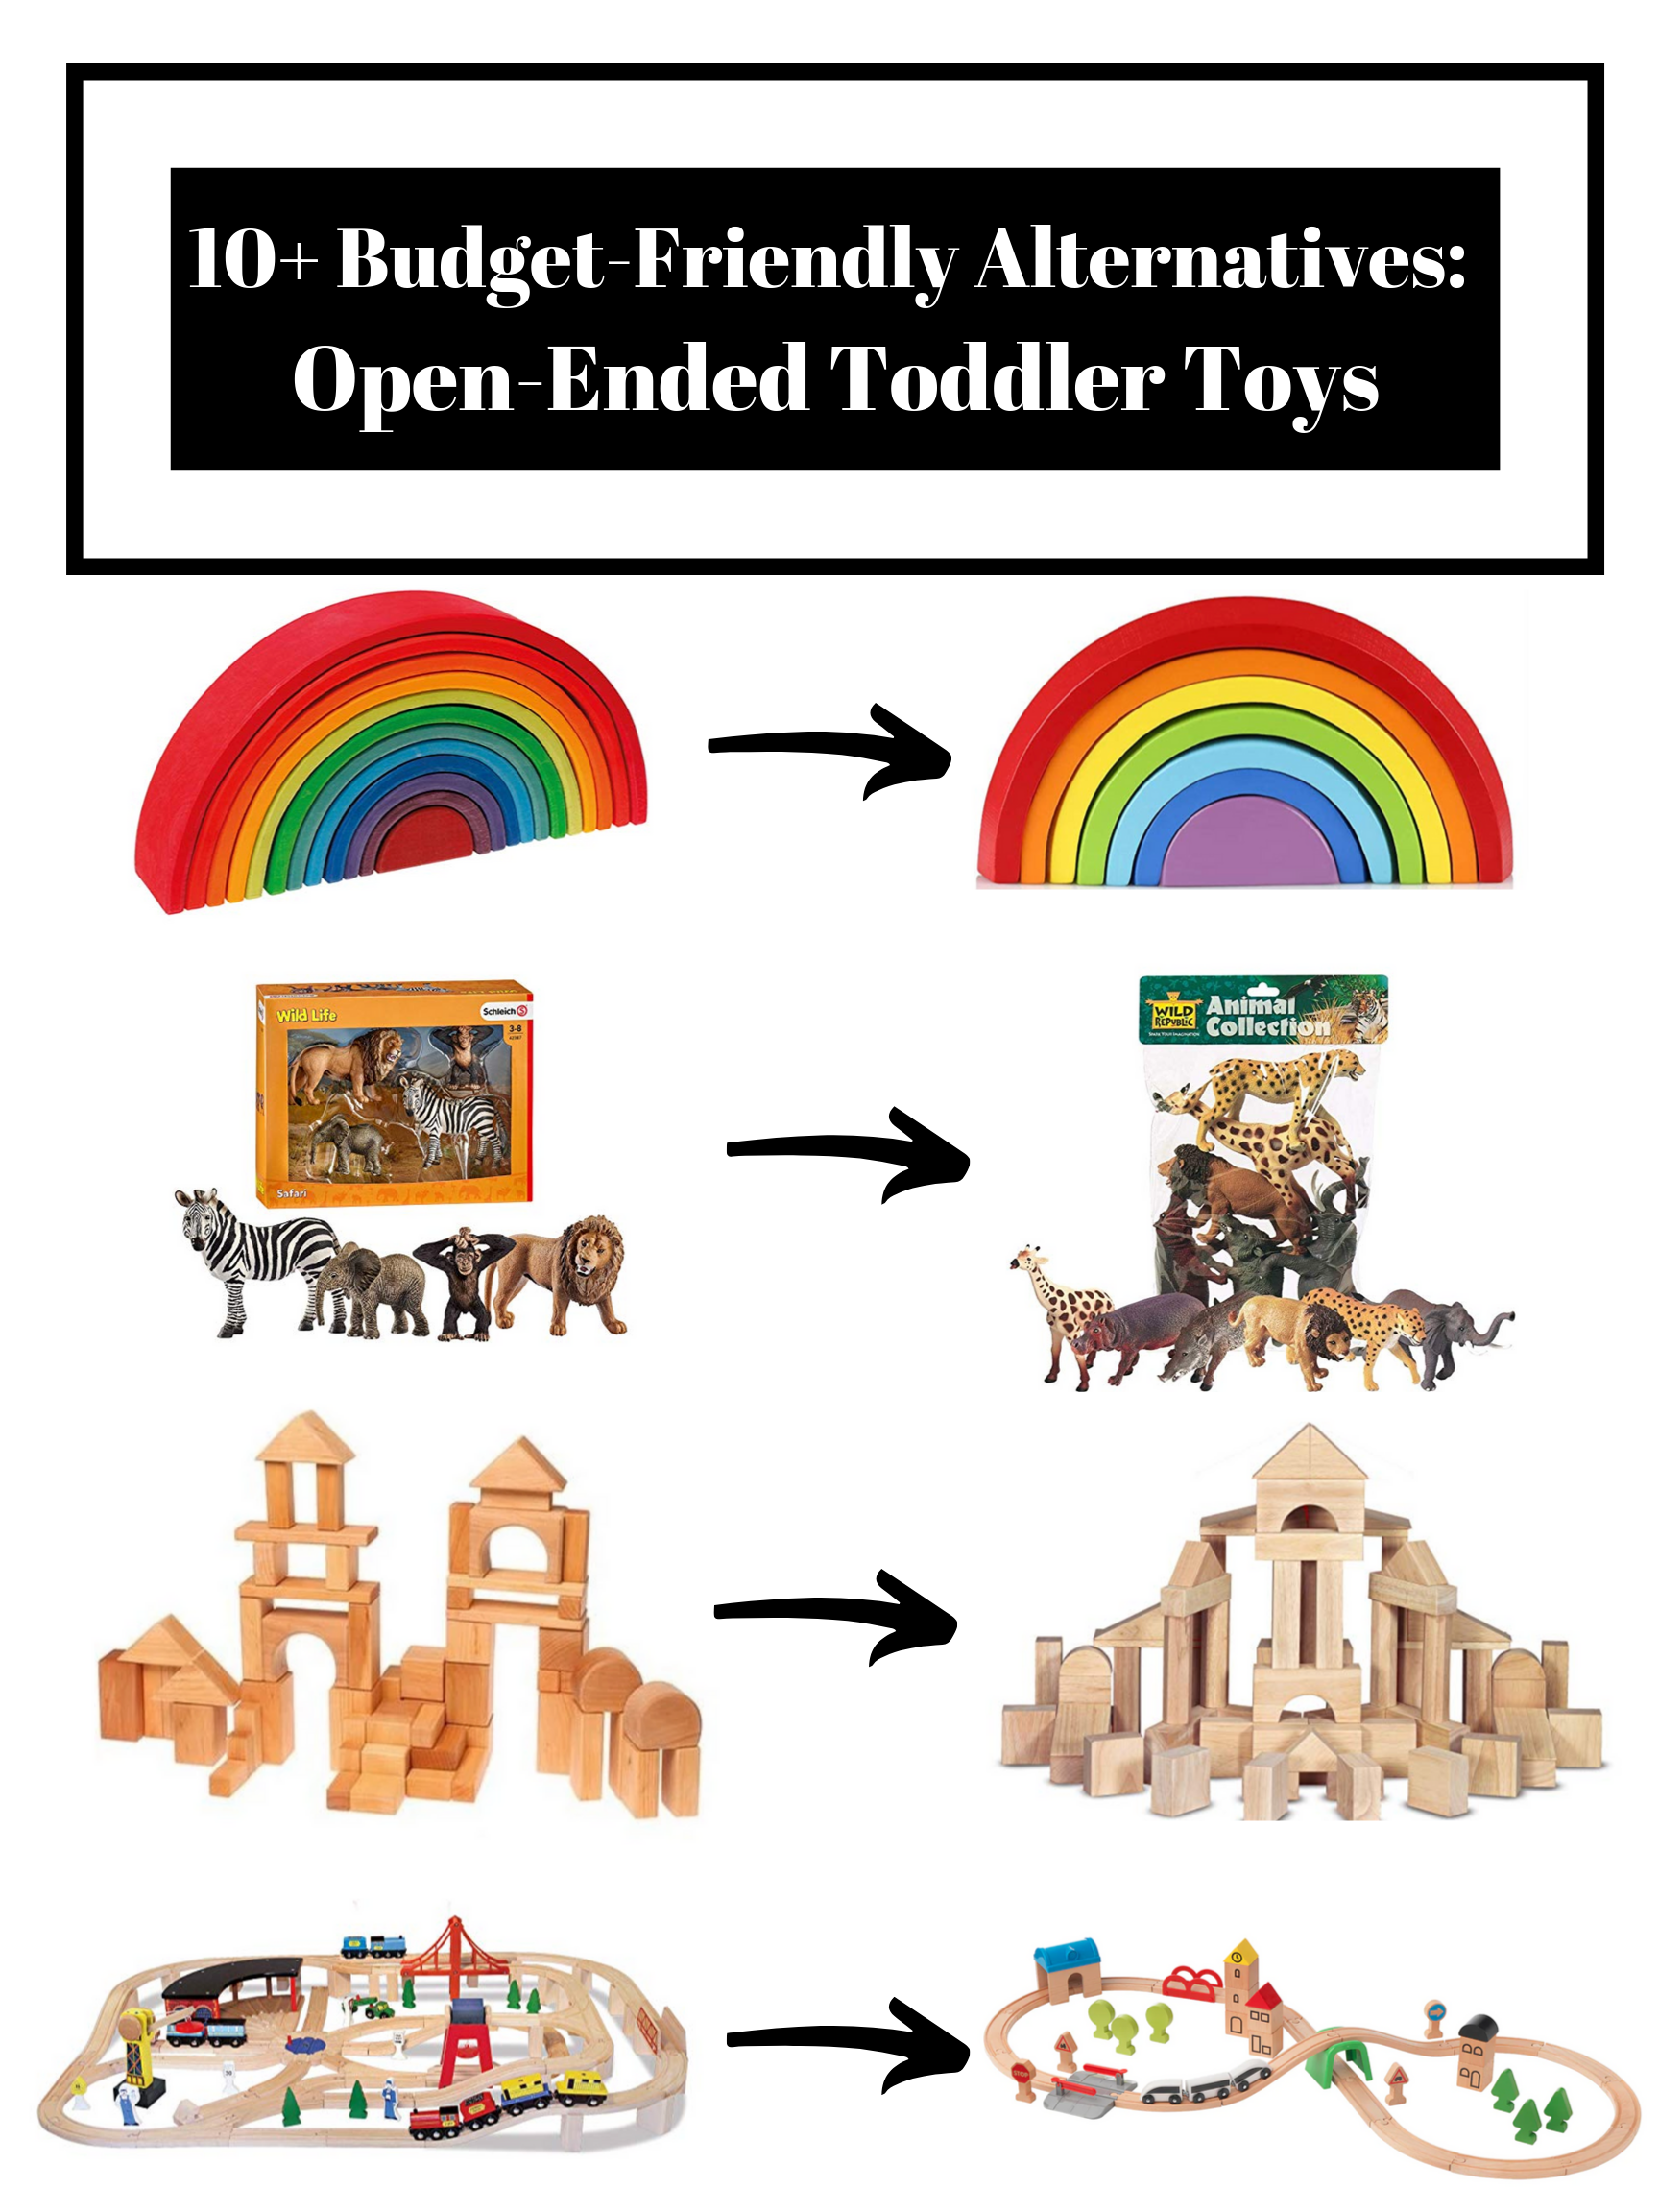 Budget-Friendly Alternatives: Open-Ended Toddler Toys